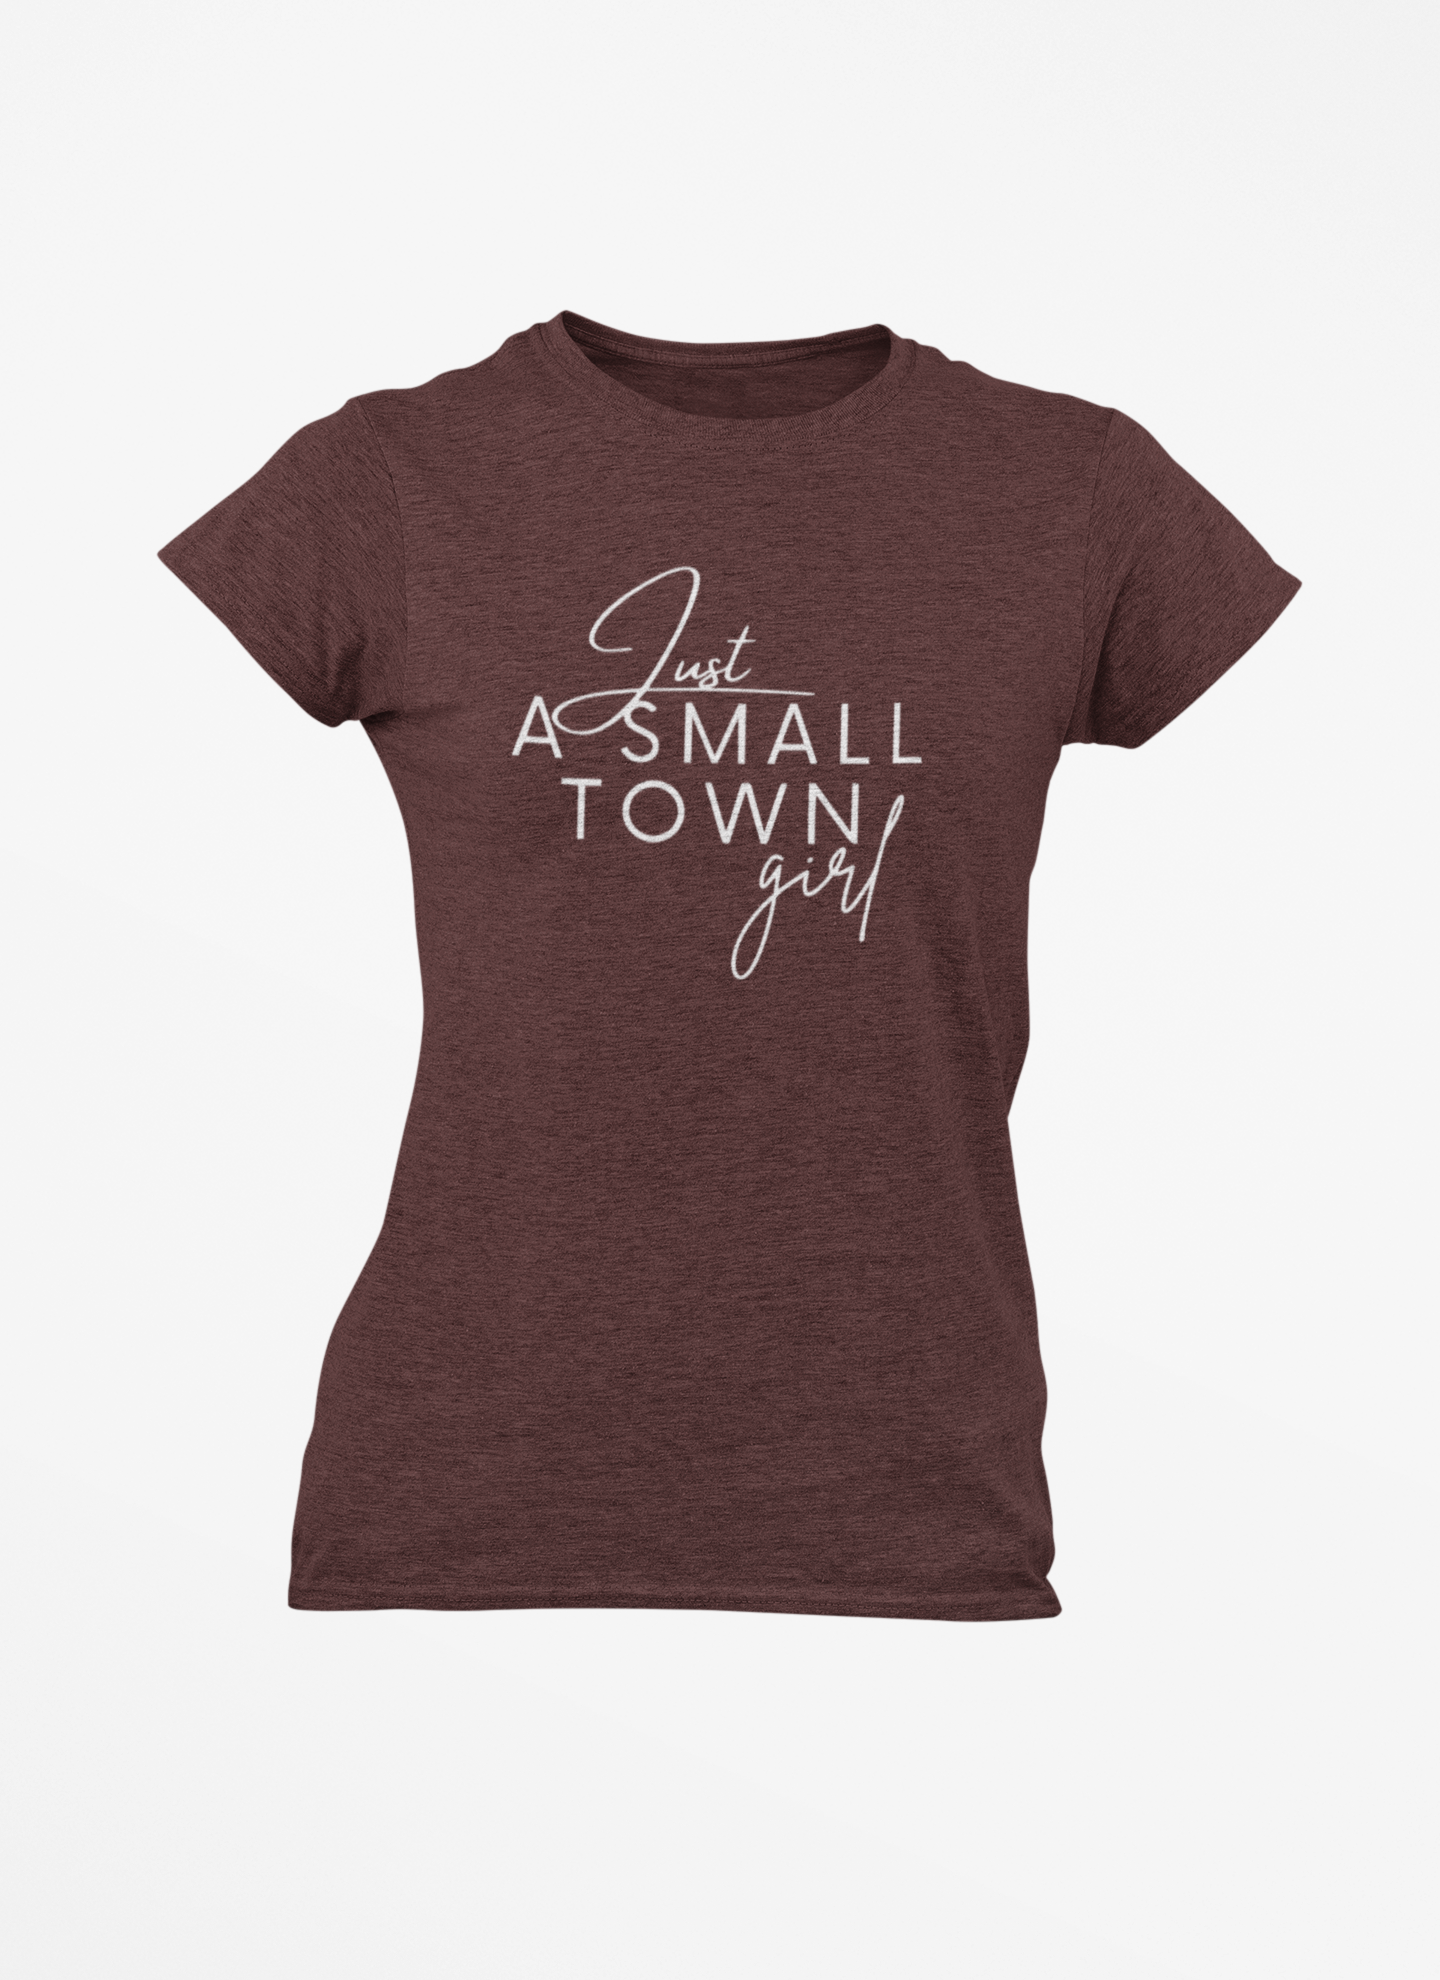 Women's Small Town Girl T-shirt